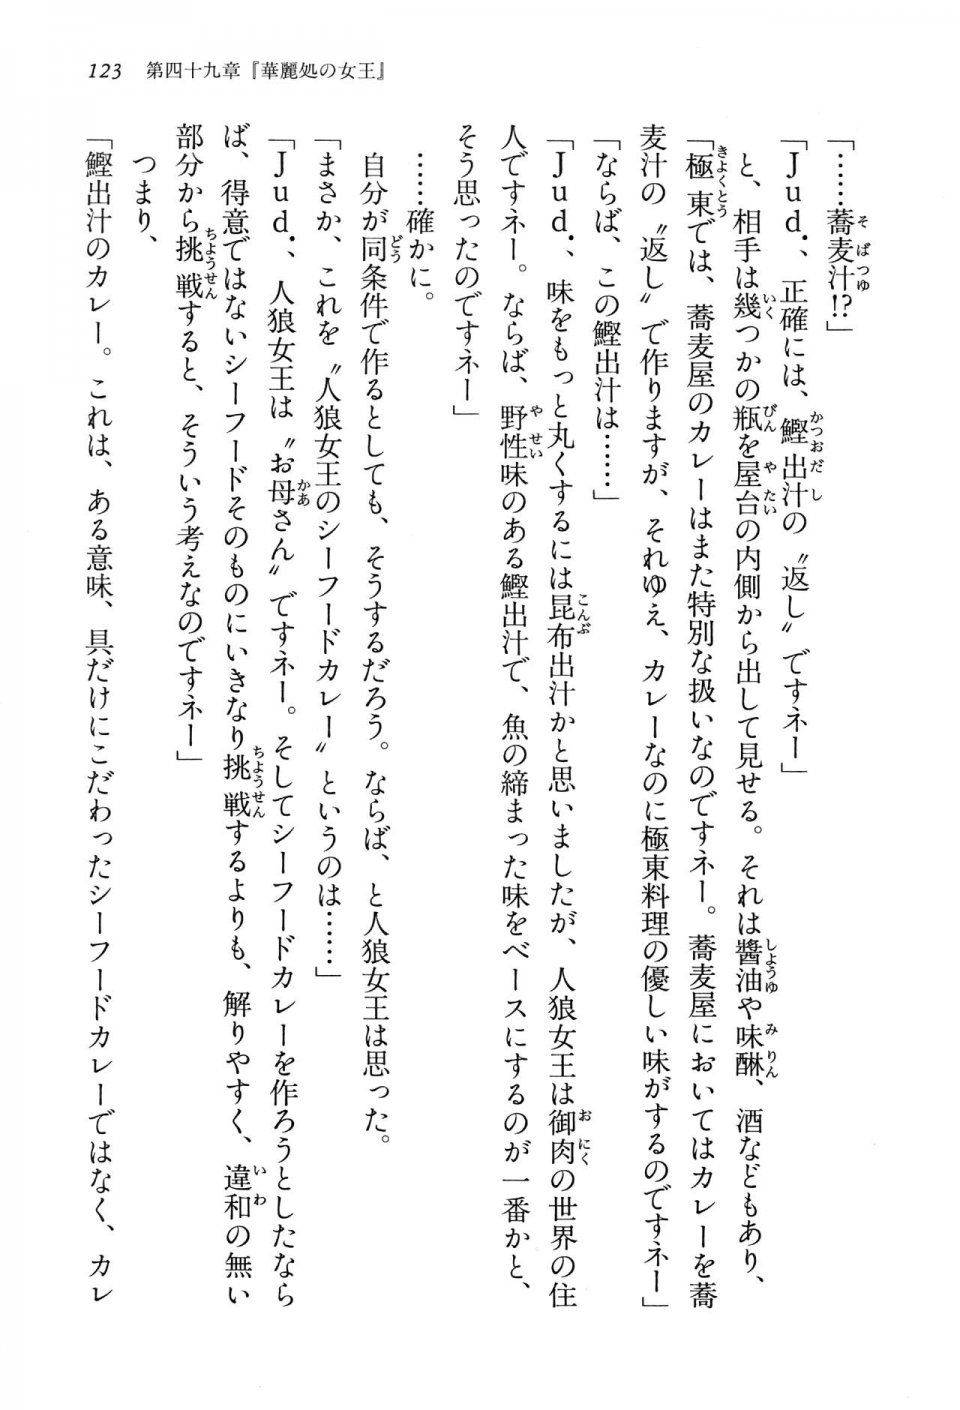 Kyoukai Senjou no Horizon LN Vol 15(6C) Part 1 - Photo #123